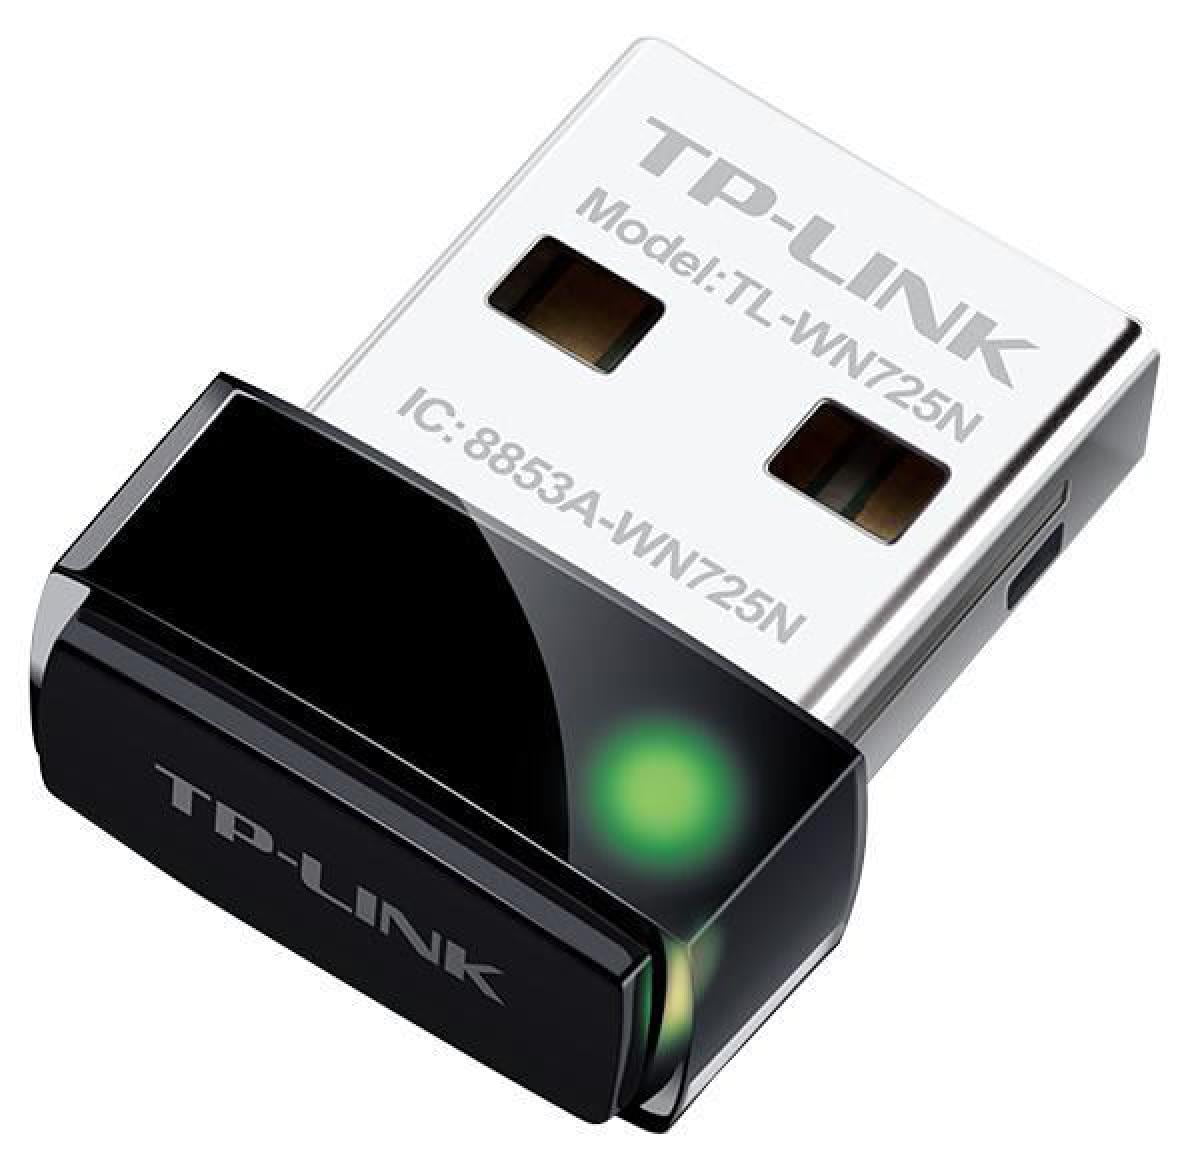 enkel benzin Intervenere TP-LINK - 150Mb/s Wireless N Nano USB Adaptor - Walmart.com